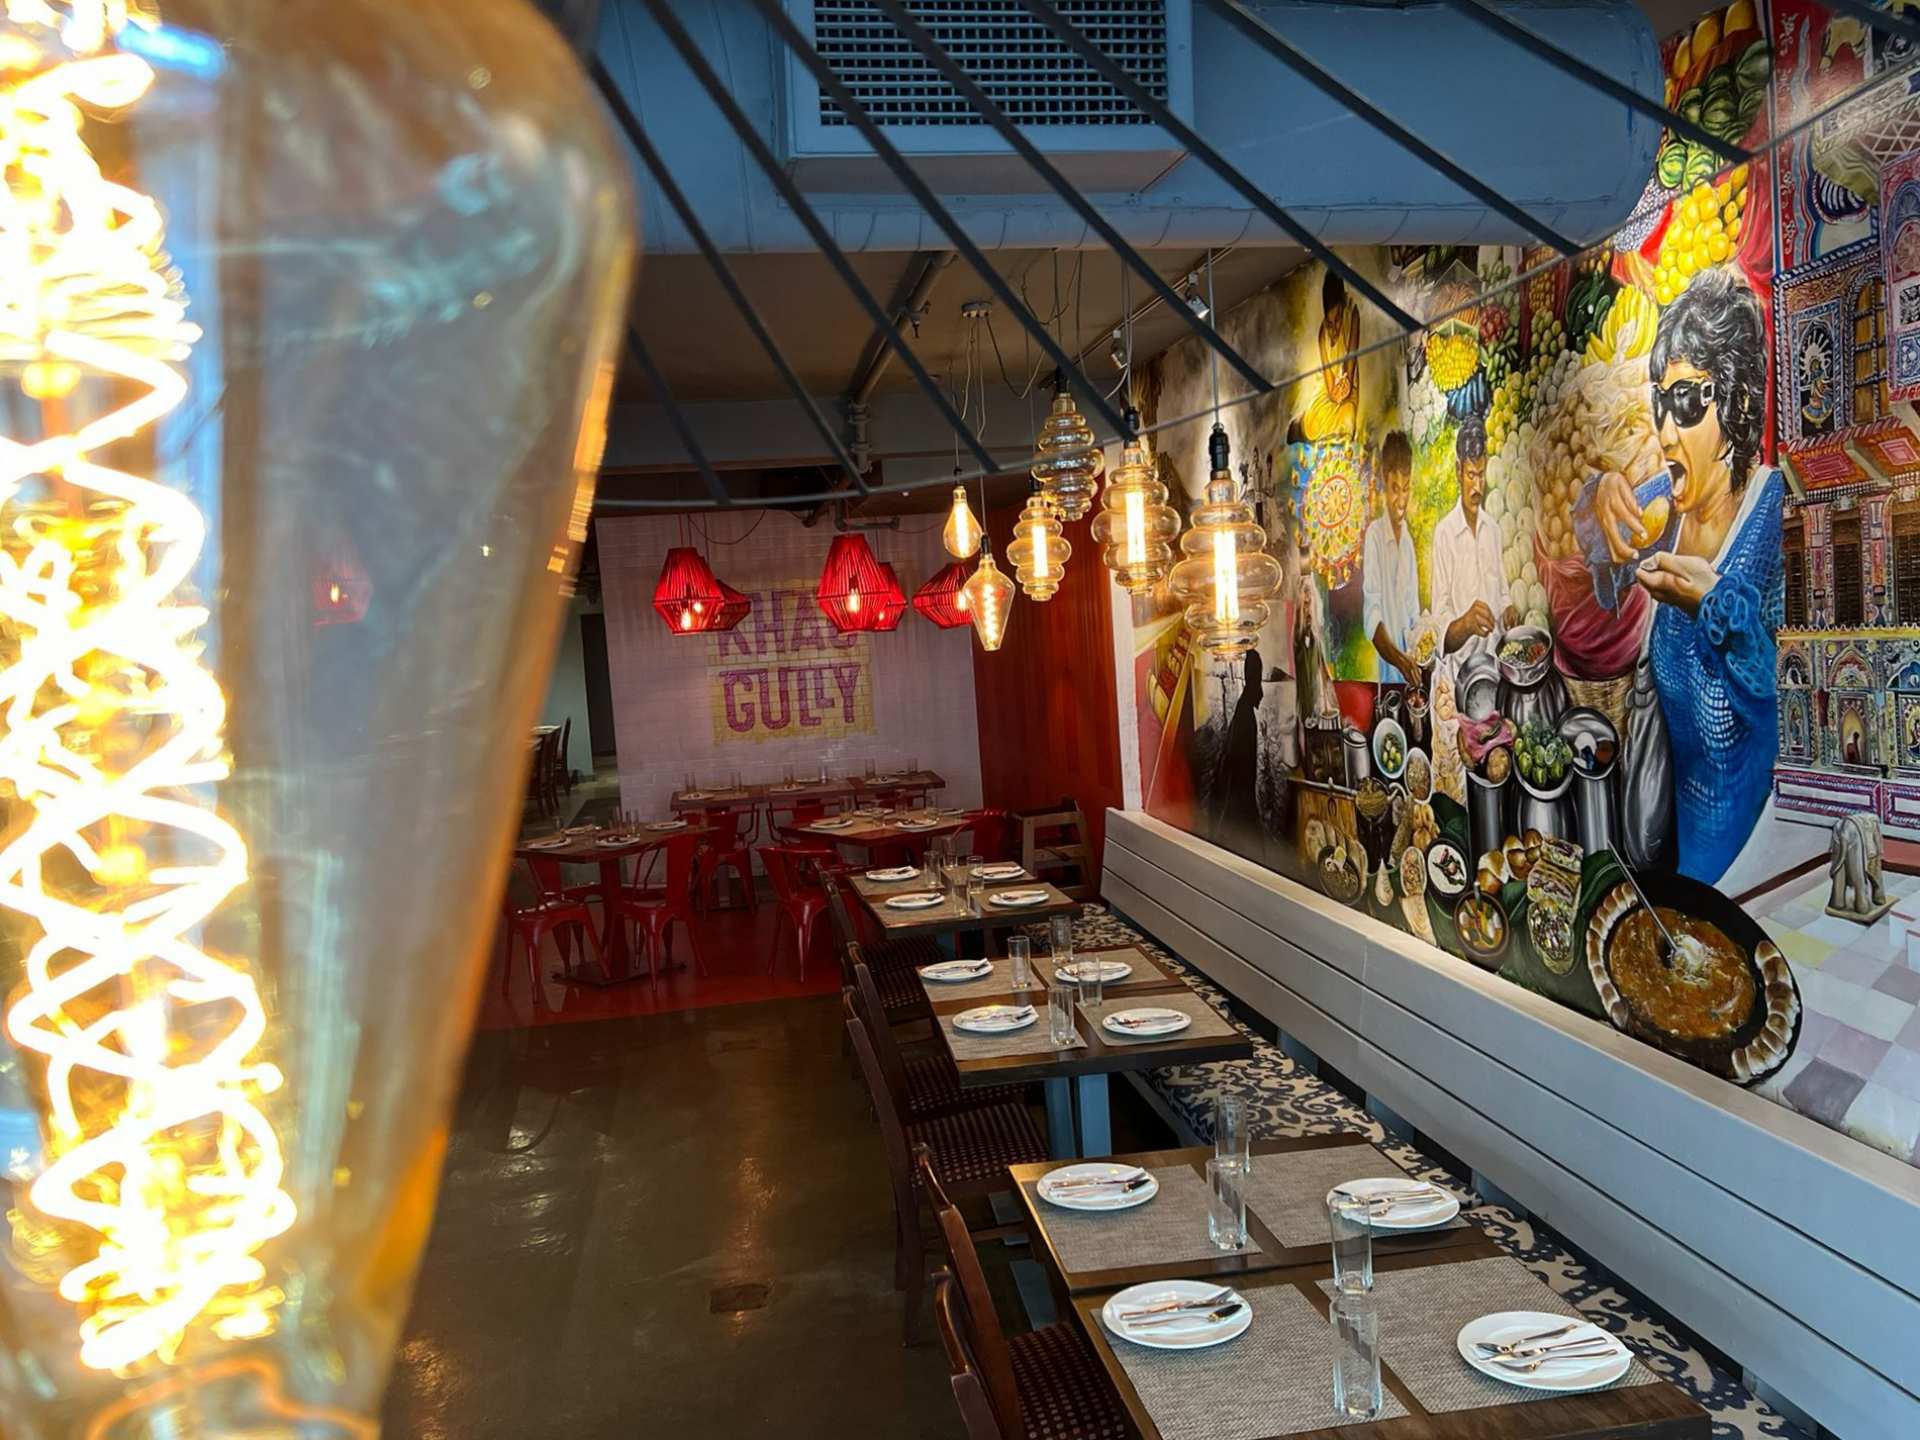 Khau Gully vegan menu | The dining room with an art mural at Khau Gully restaurant